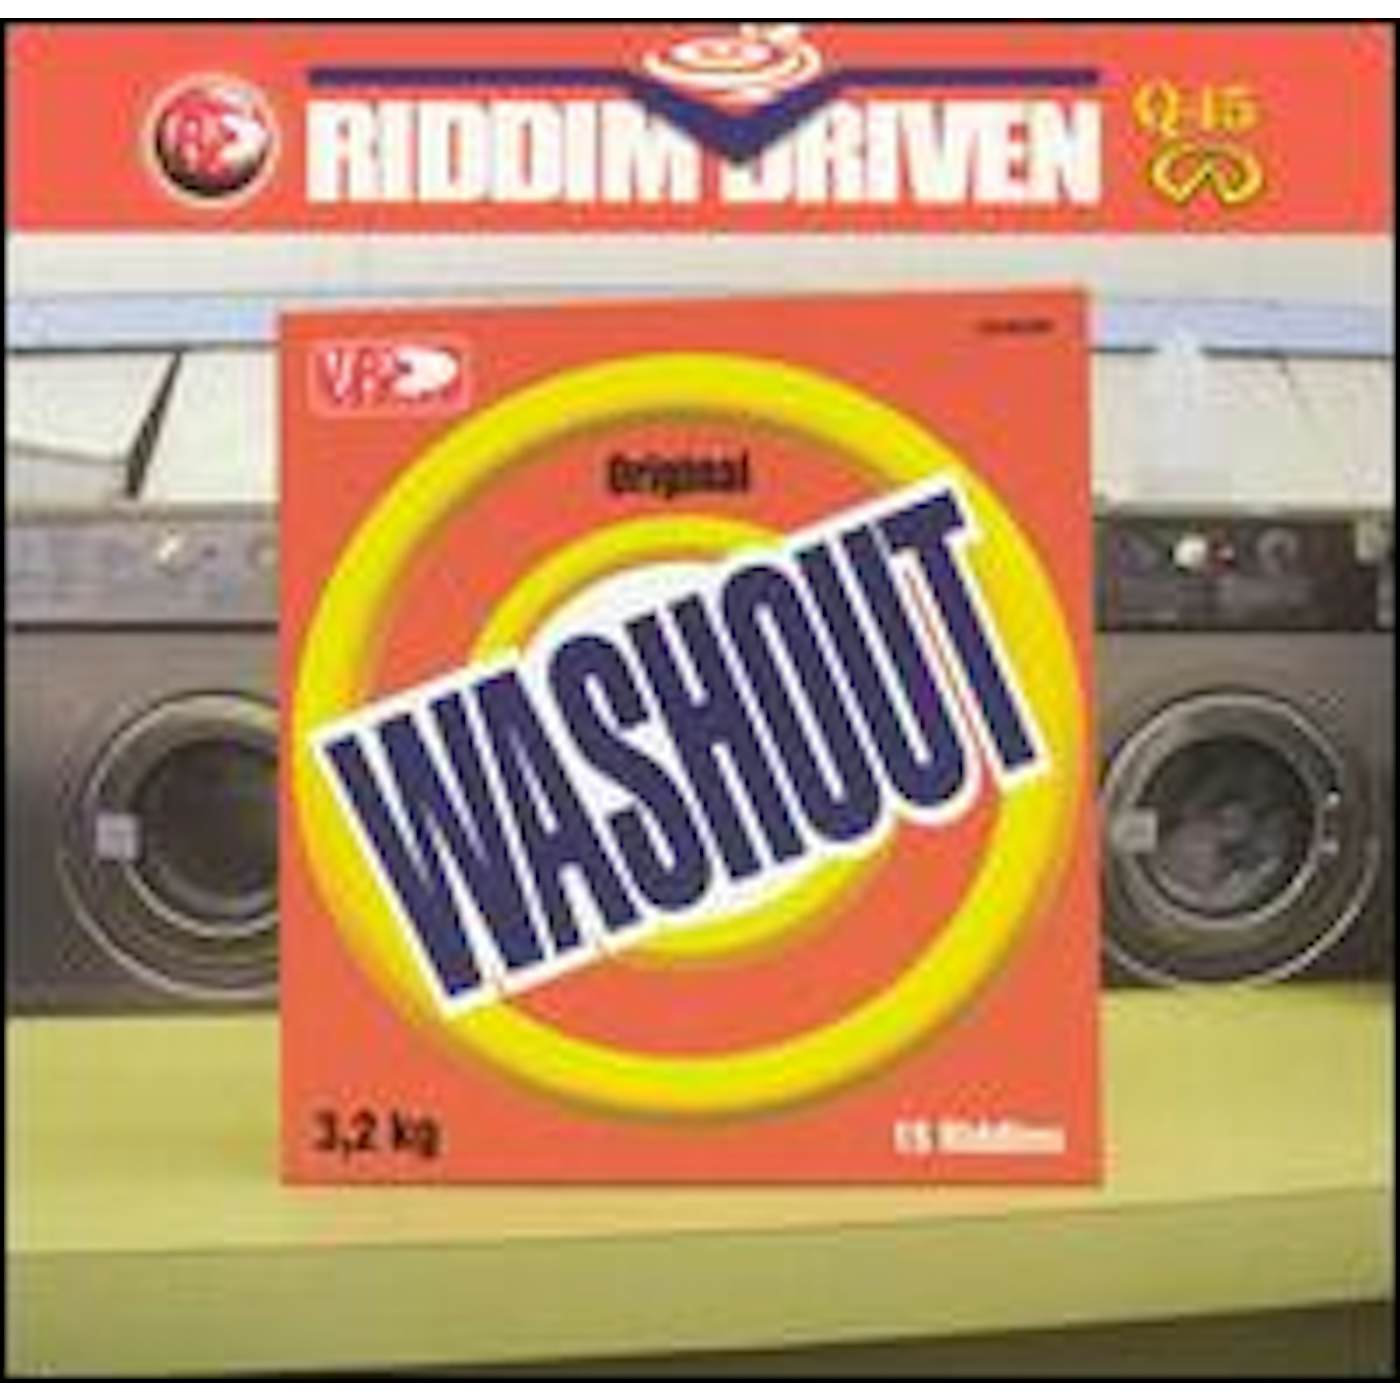 RIDDIM DRIVEN: WASHOUT / VARIOUS Vinyl Record